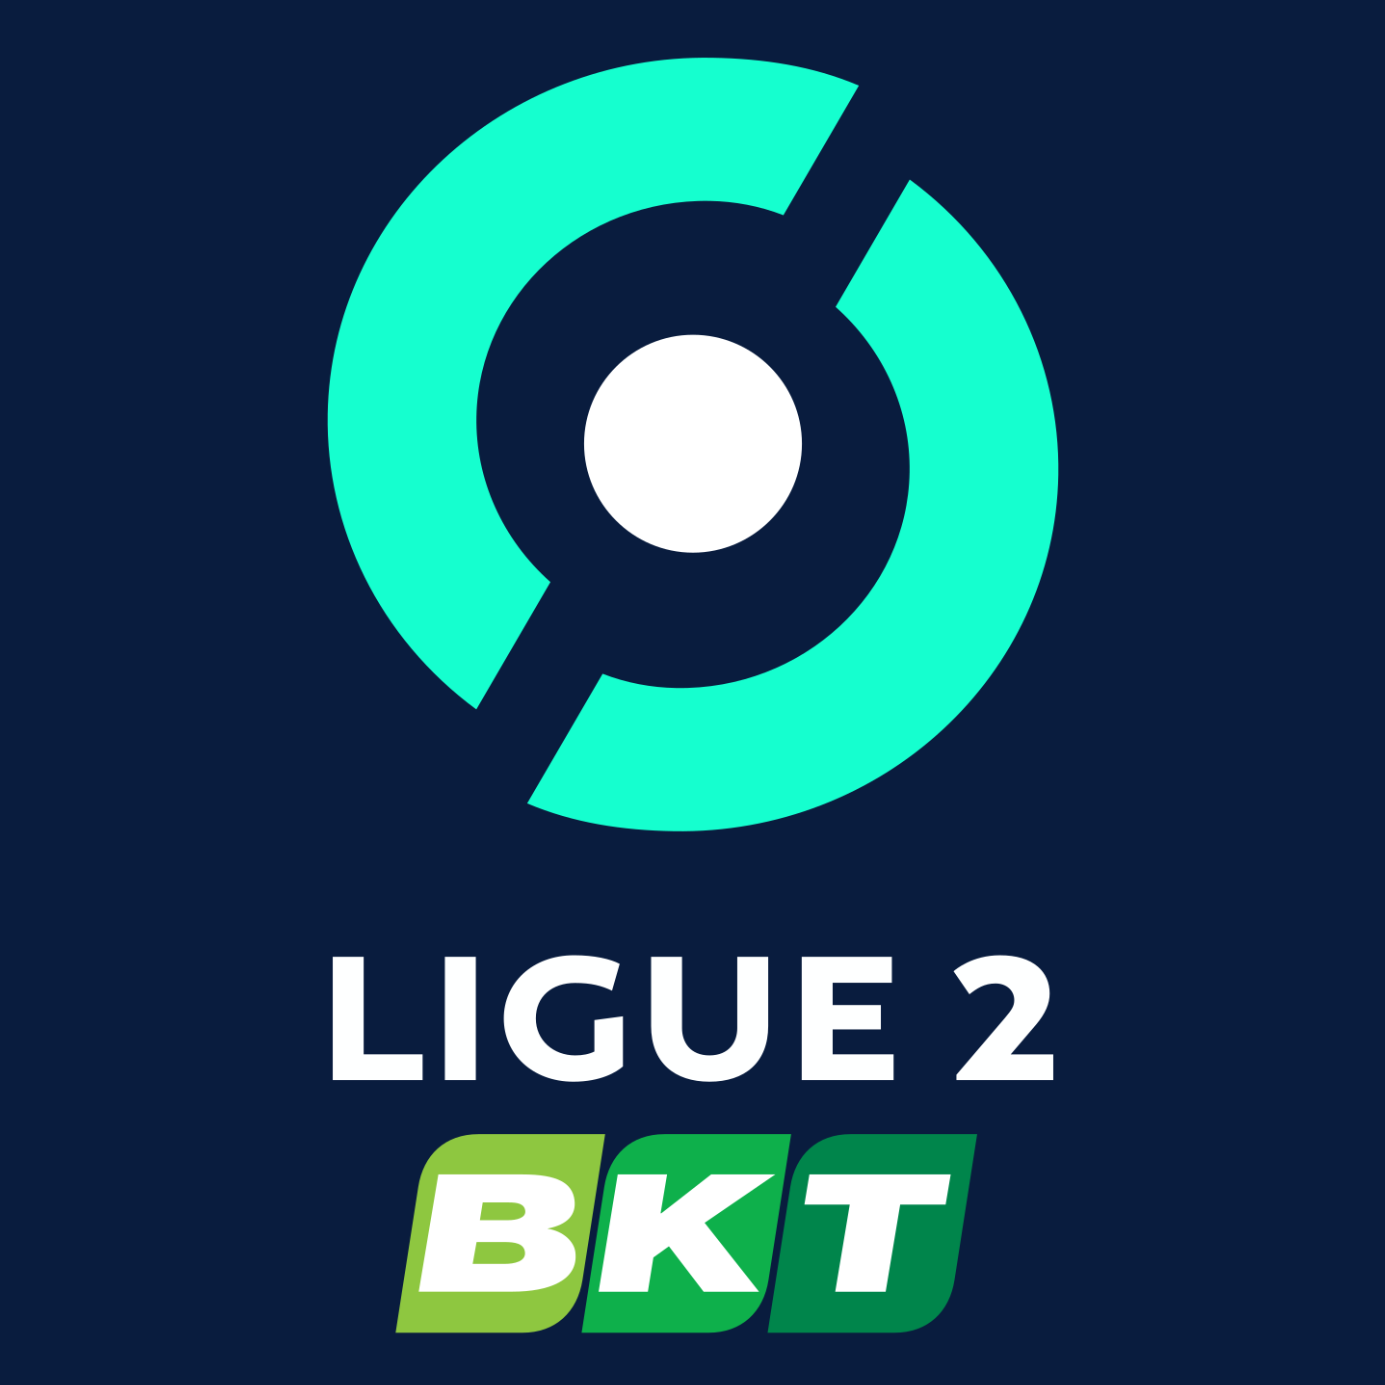 Programme TV Ligue 2